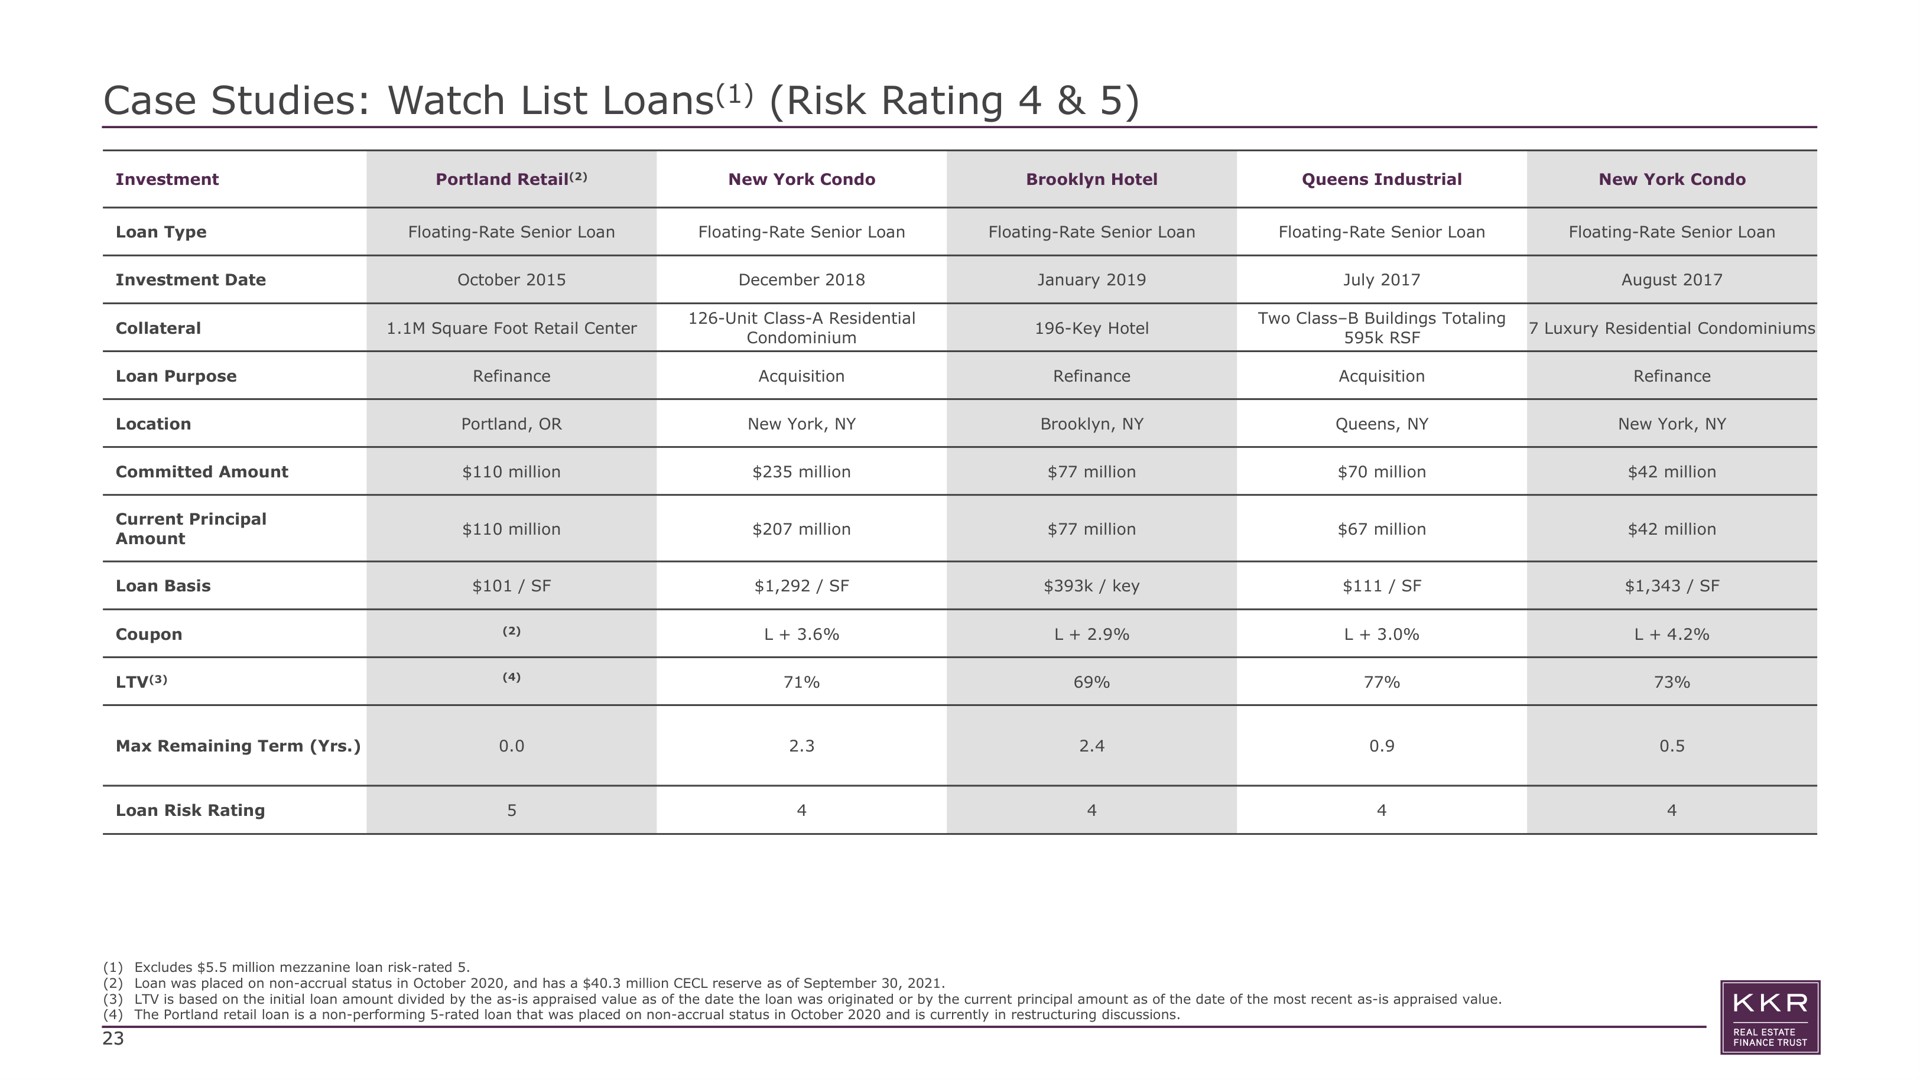 case studies watch list loans risk rating key | KKR Real Estate Finance Trust